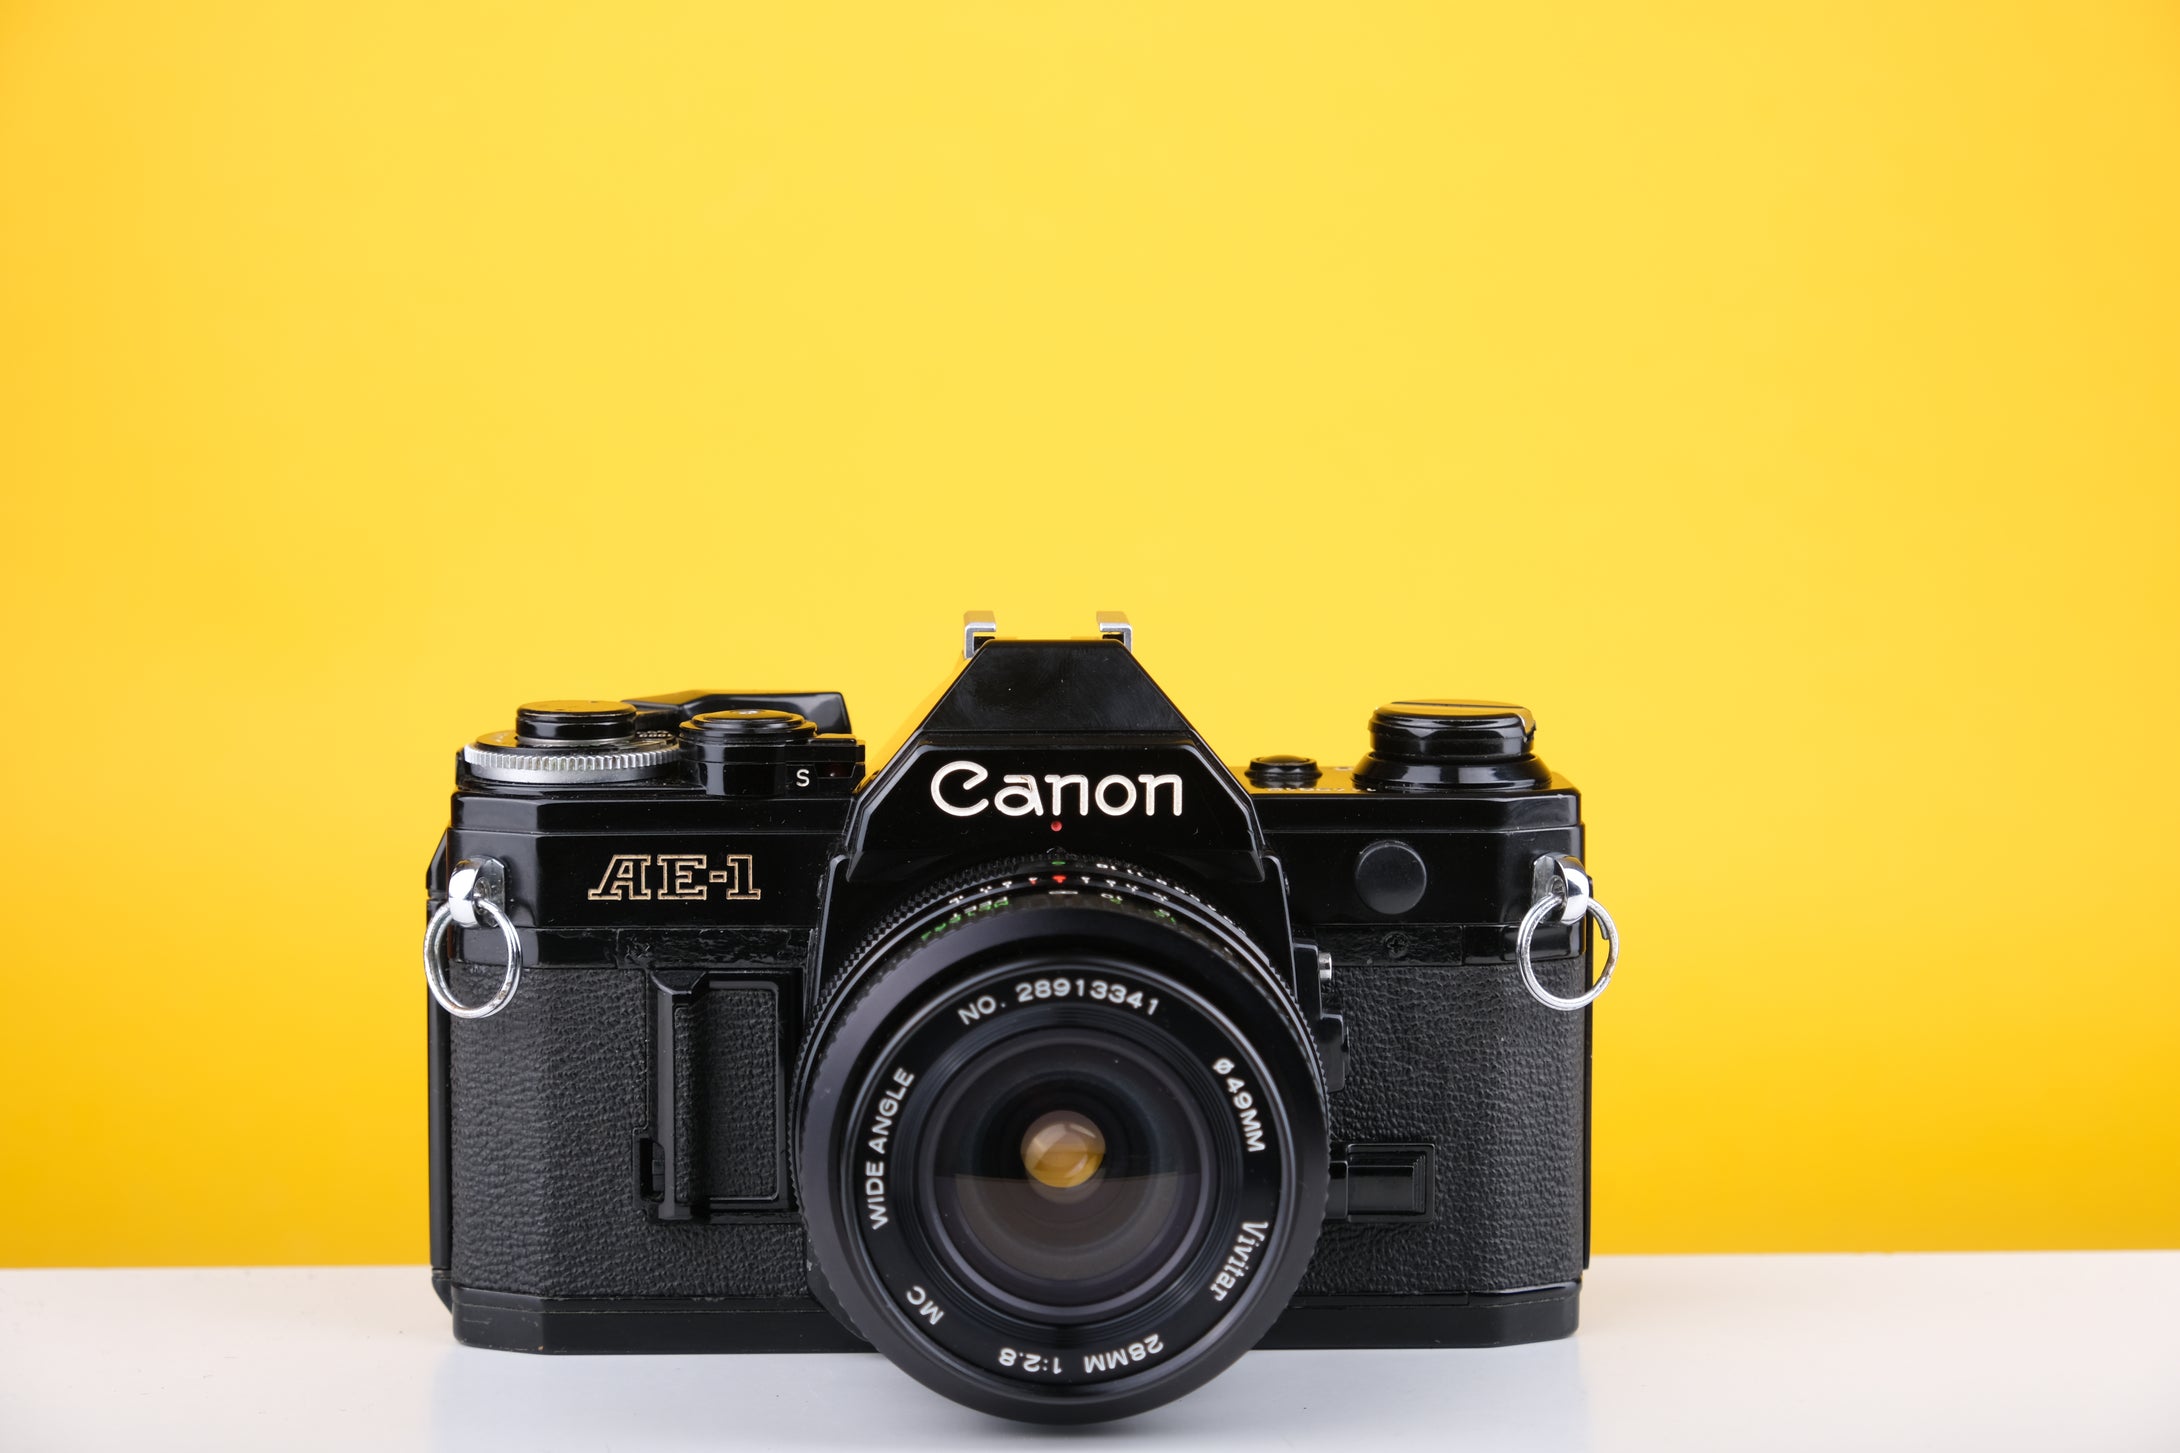 Canon AE-1 35mm SLR Film Camera with Vivitar 28mm f2.8 Lens